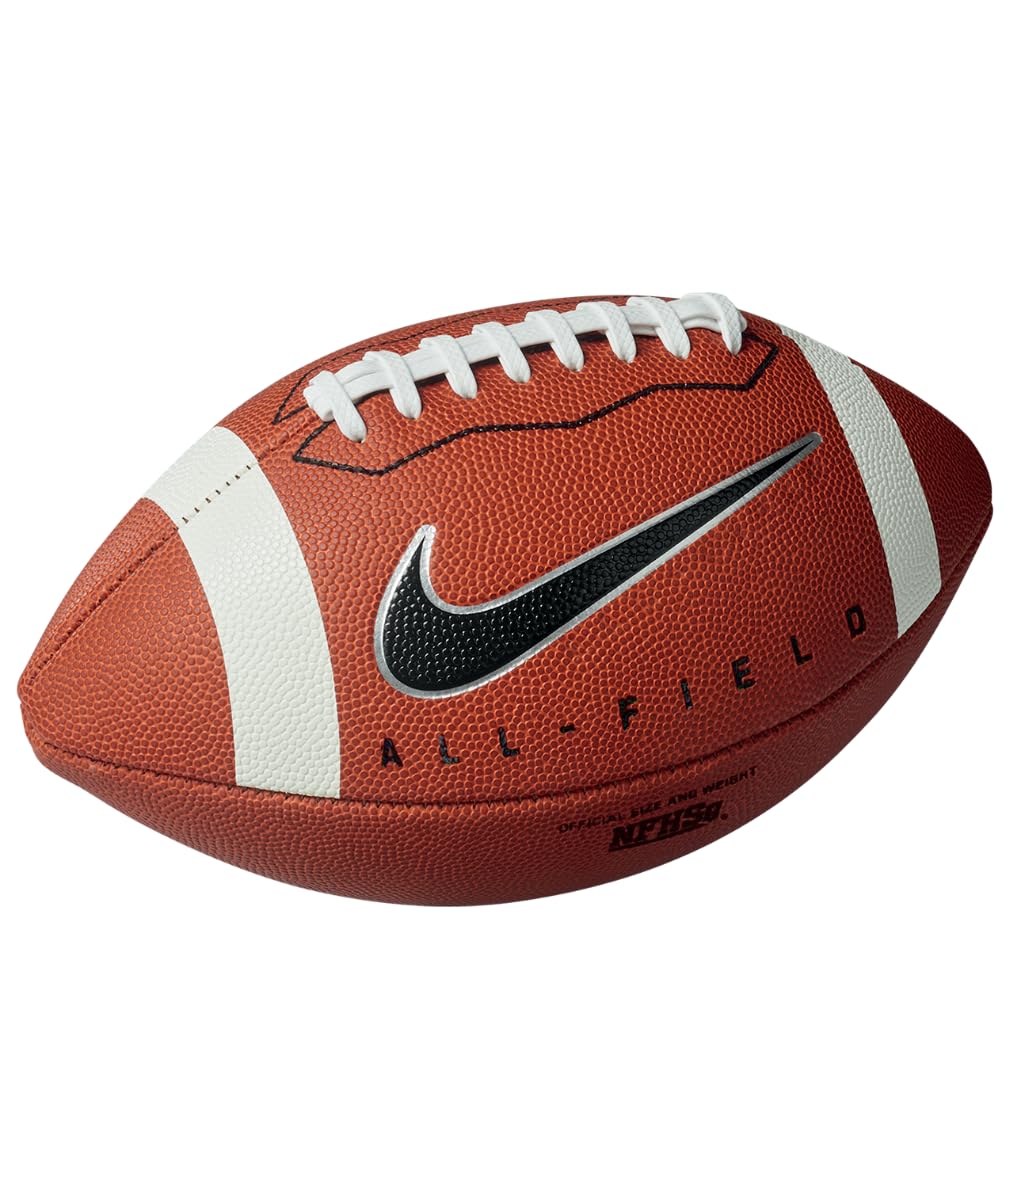 Nike All-Field 4.0 Football